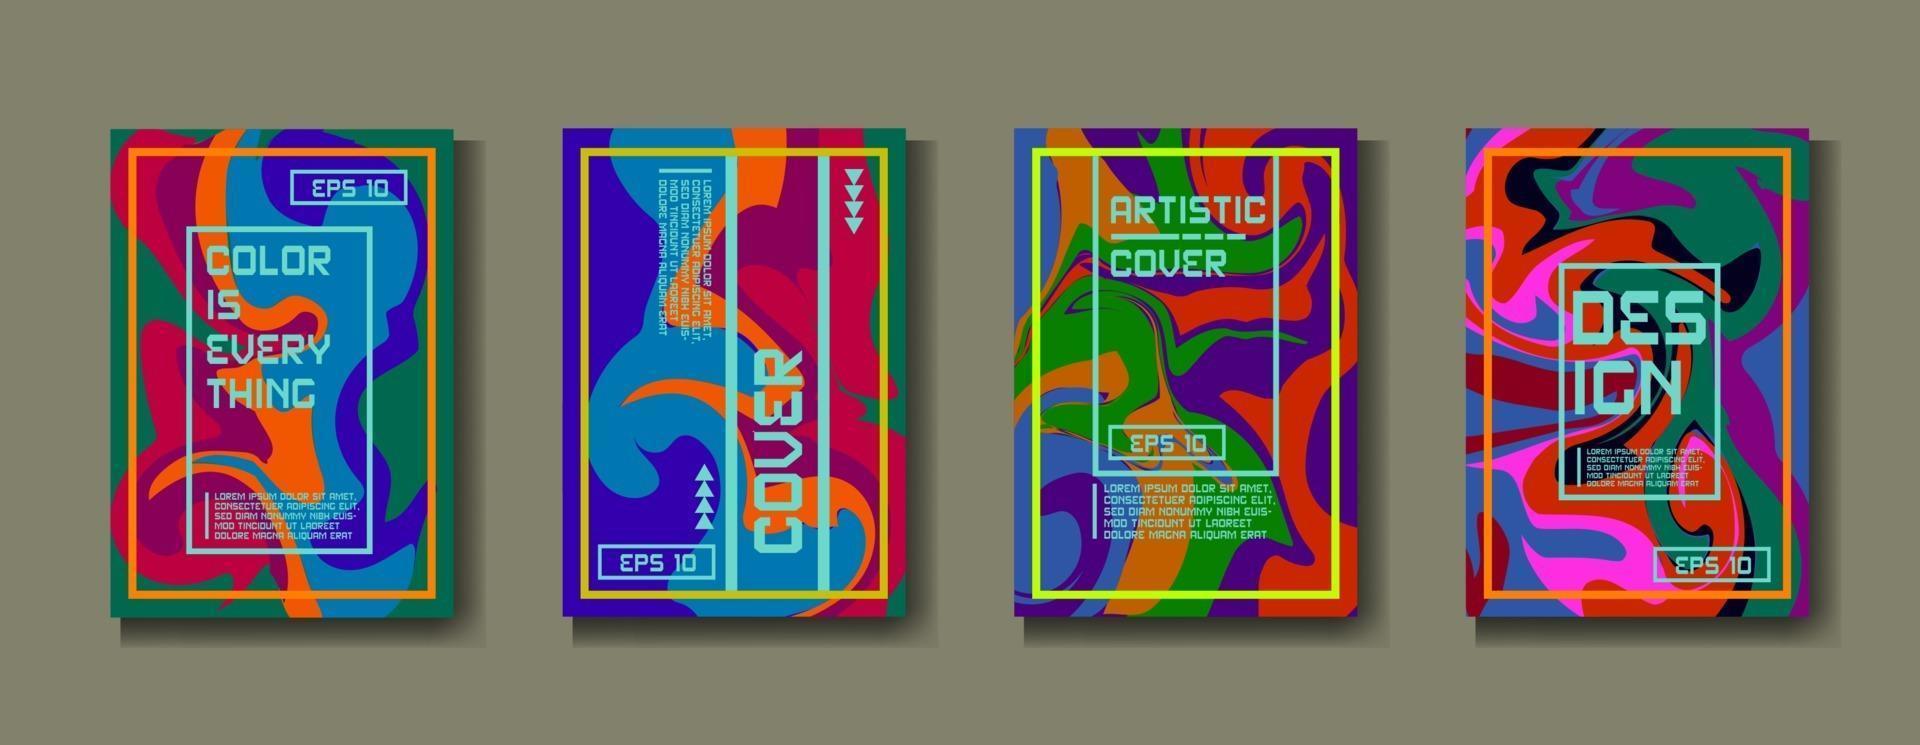 ontwerpsjabloon omslag, poster, brochure set. retro stijl. a4-formaat. eps 10 vector